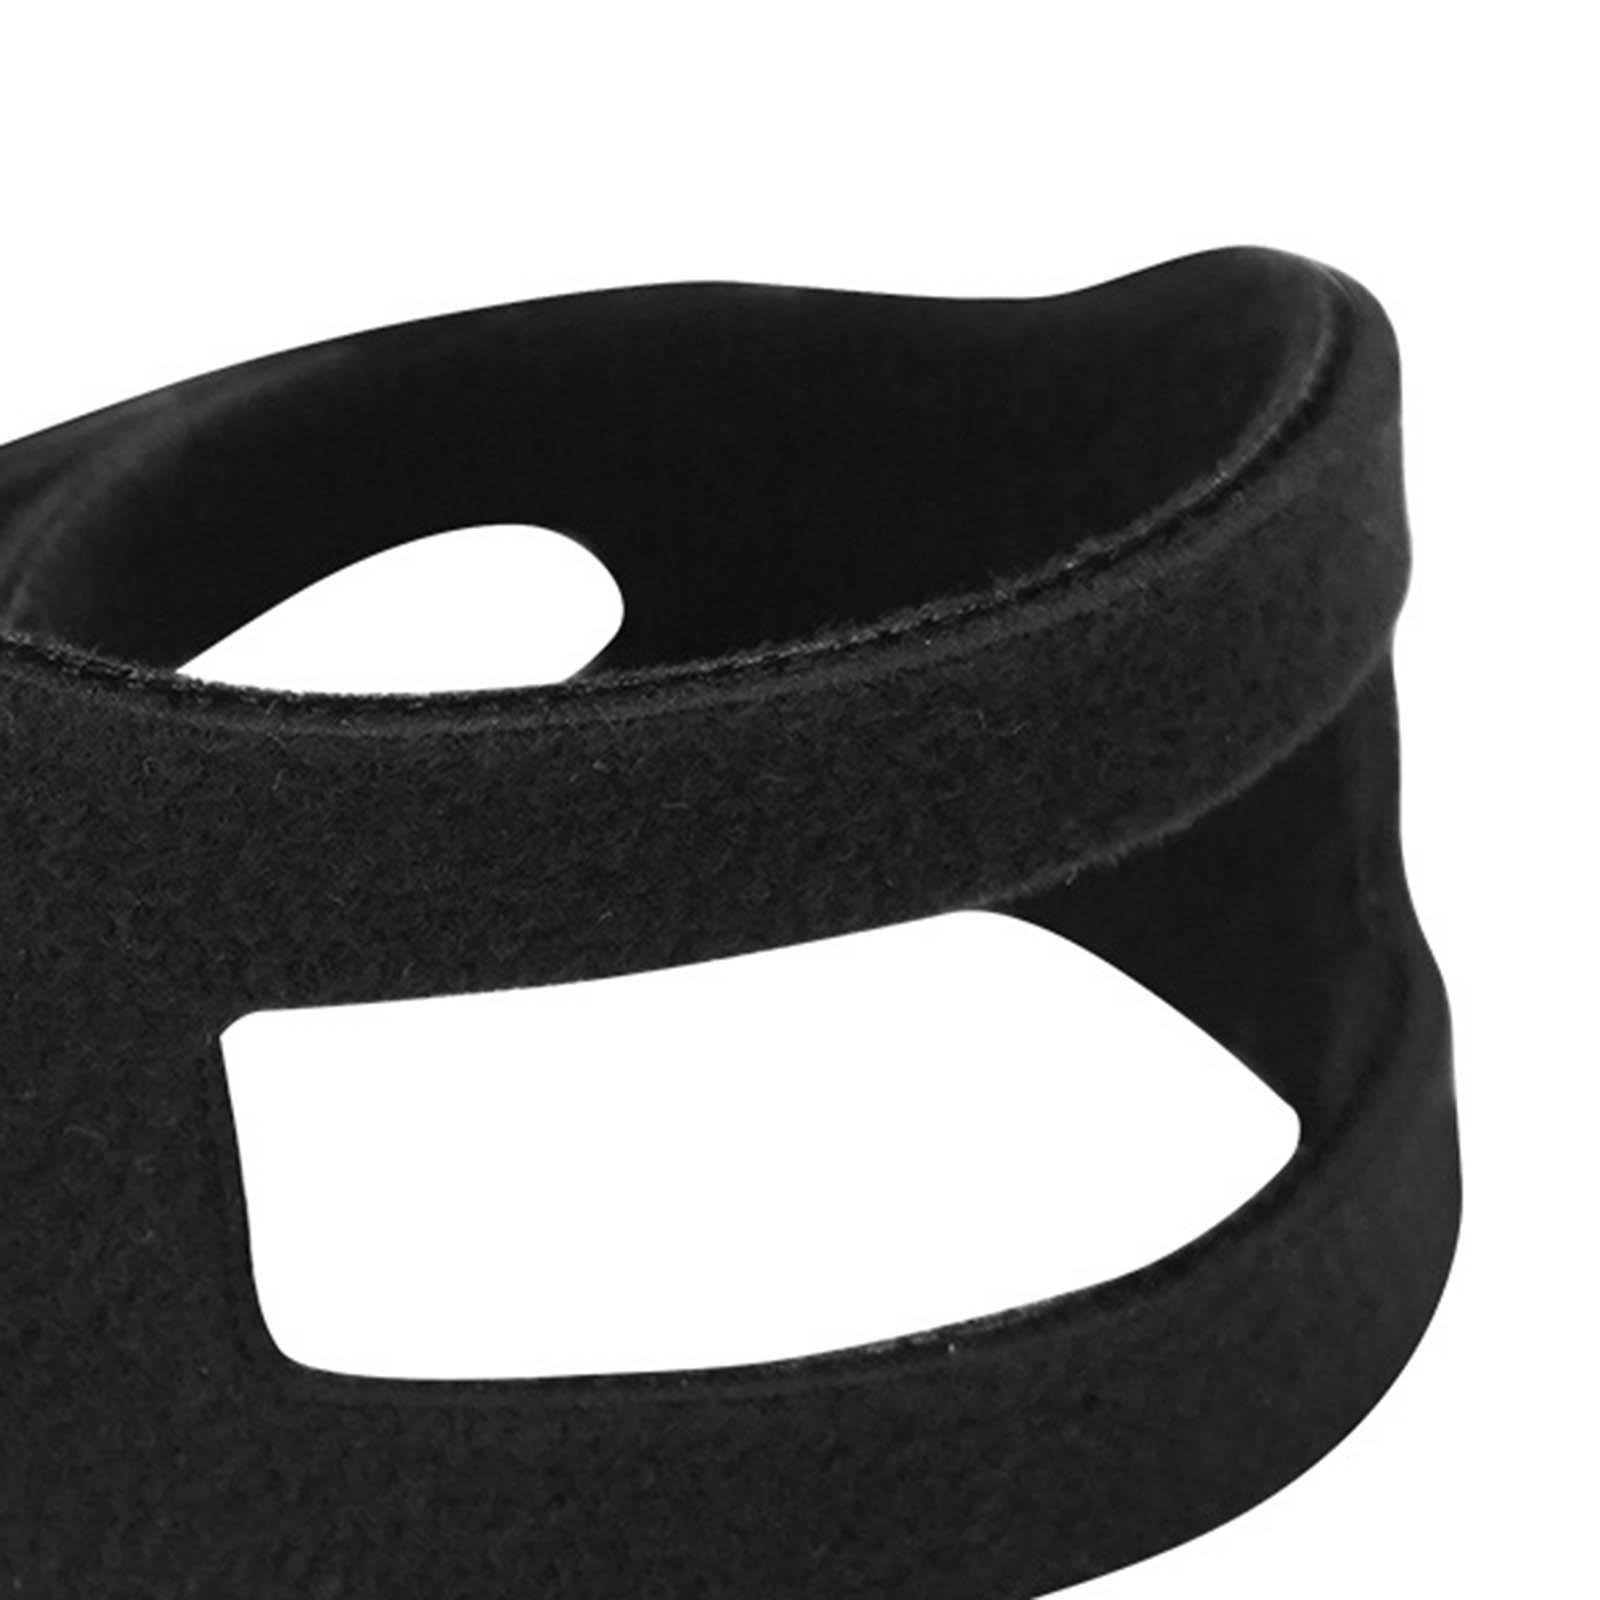 Tfcc Wrist Brace Ulnar Sided Wrist Pain Adjustable Band for Fitness Sports